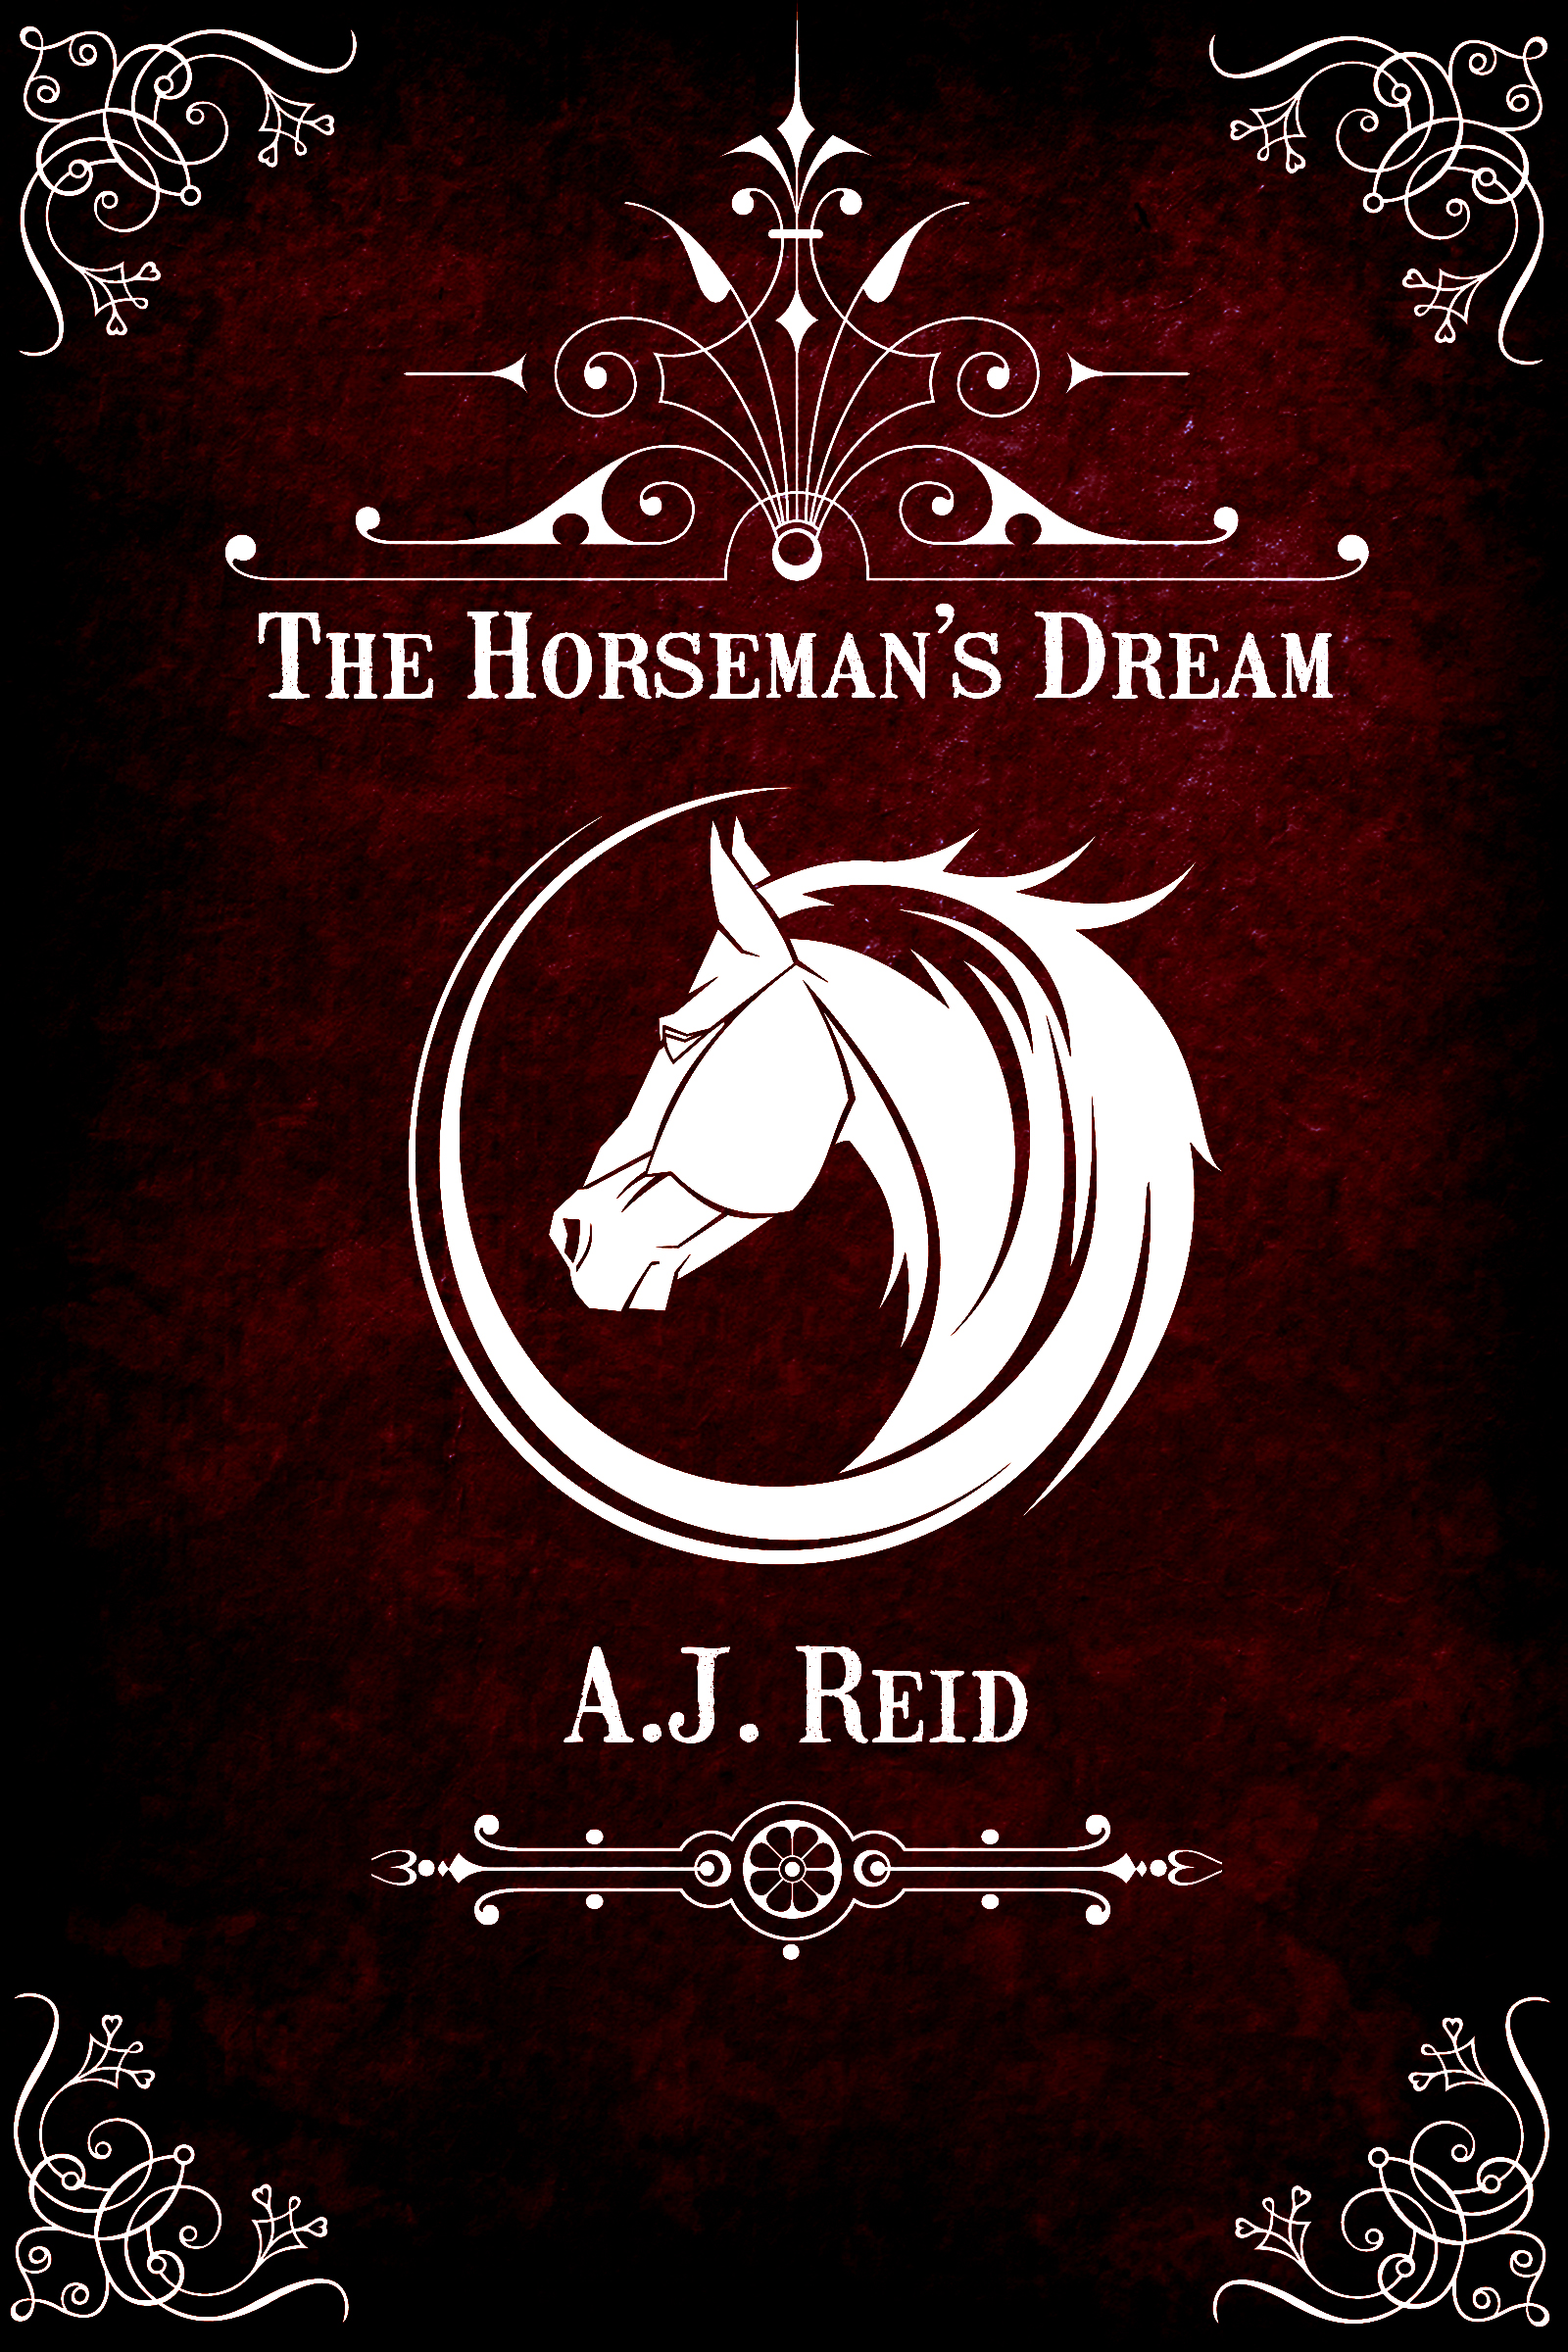 The Horseman’s Dream Update